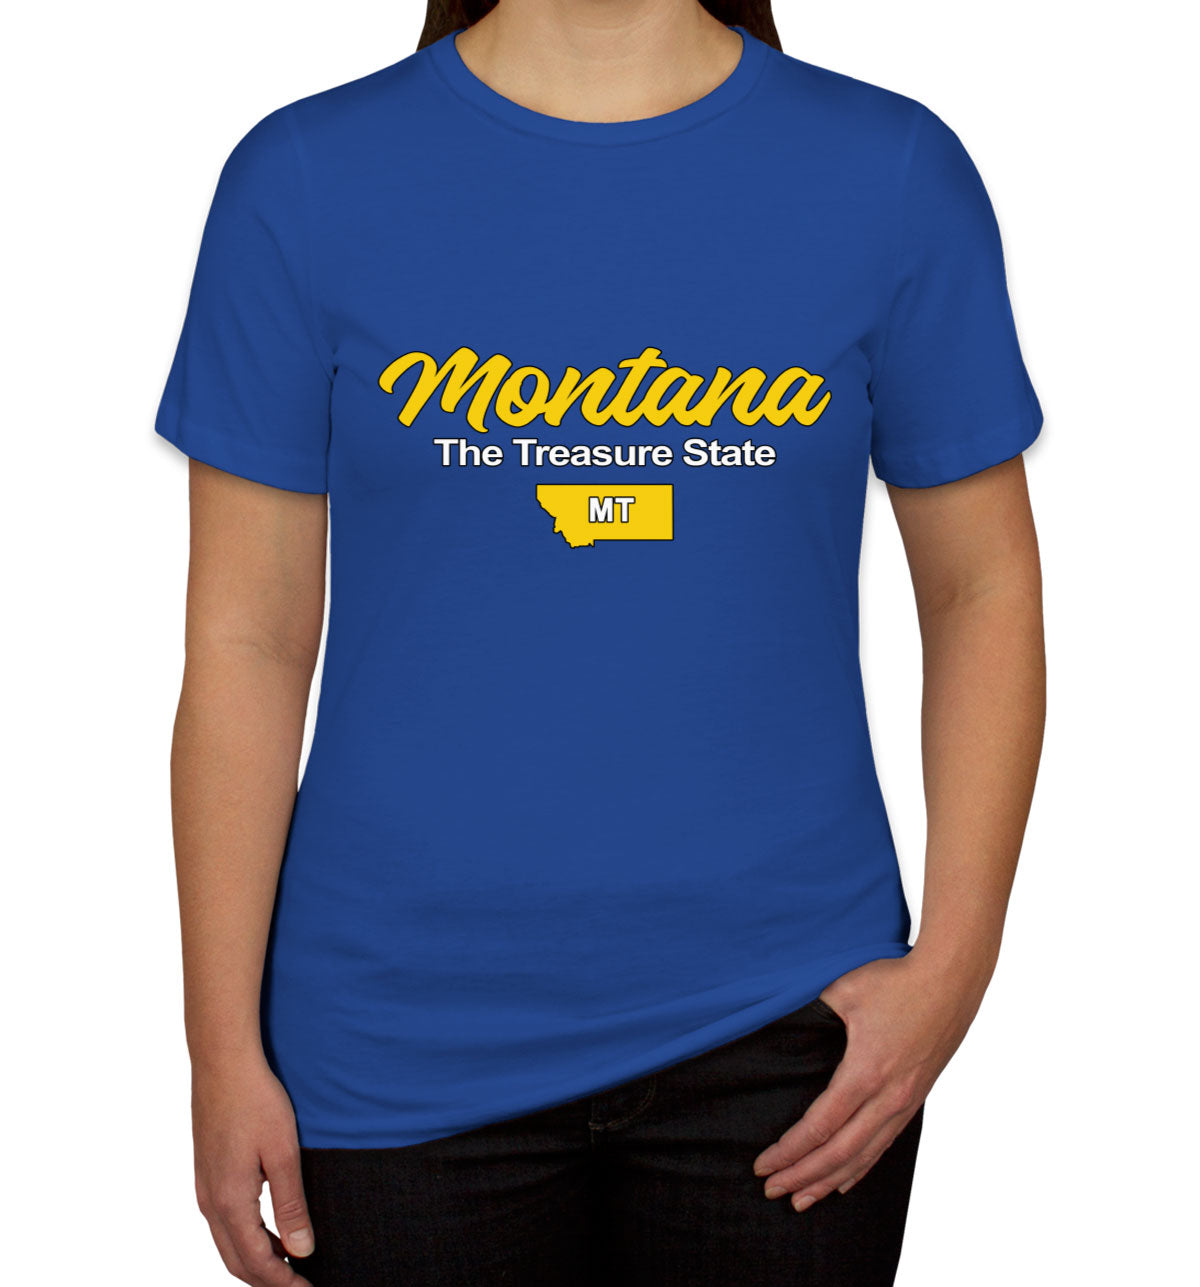 Montana The Treasure State Women's T-shirt